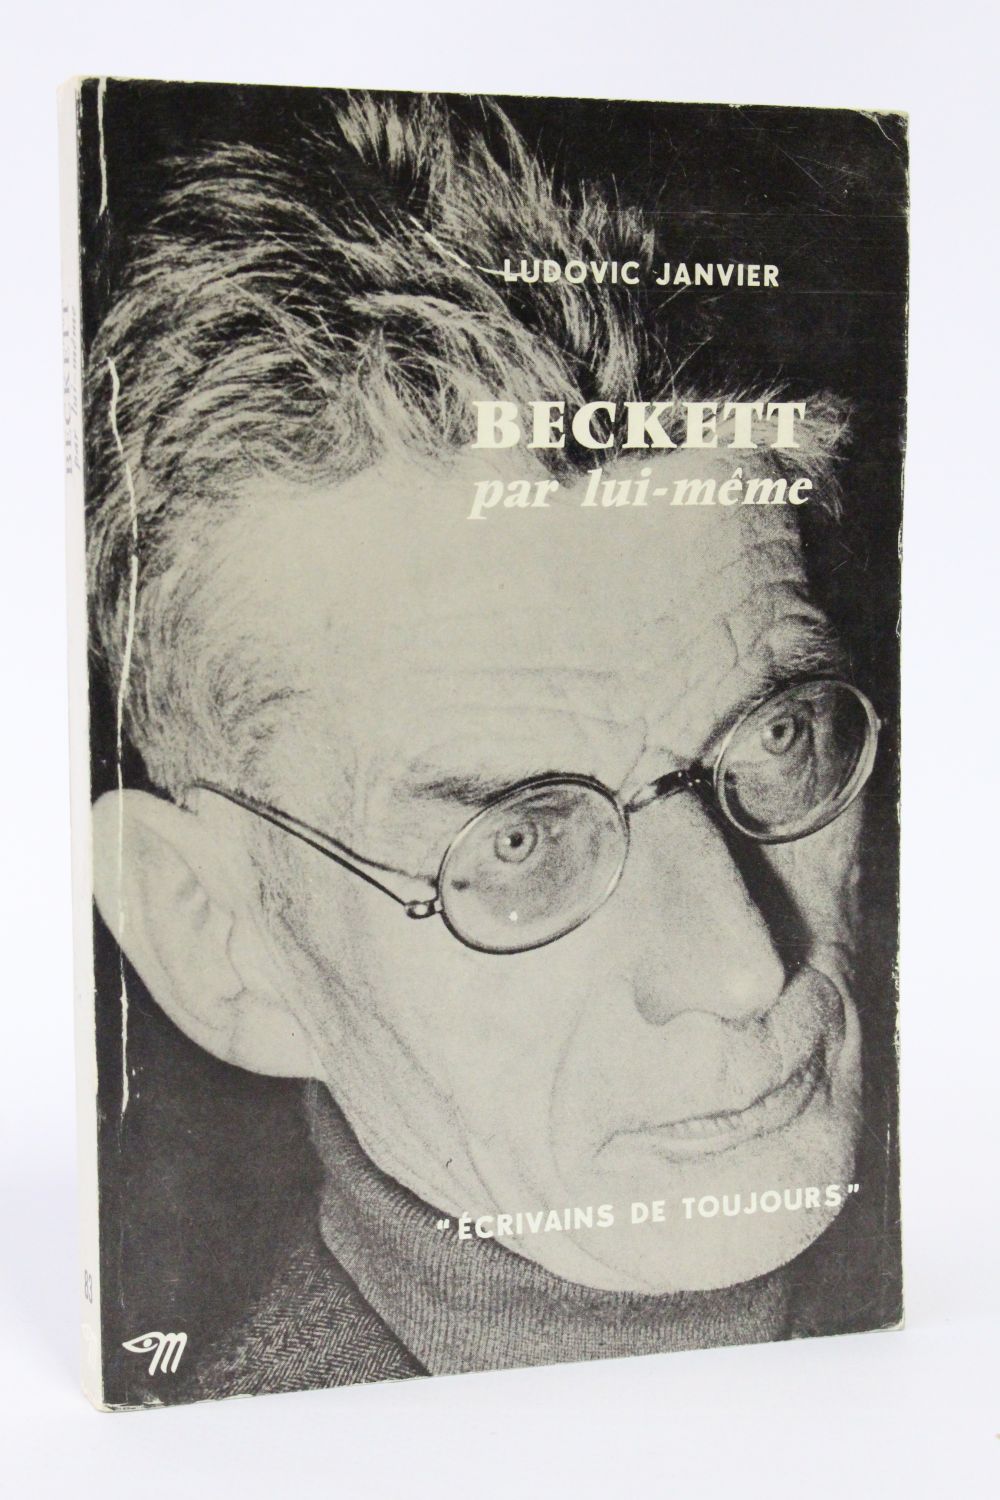 Can T Go On I Ll Go On Samuel Beckett The Unnamable I Can T Go On